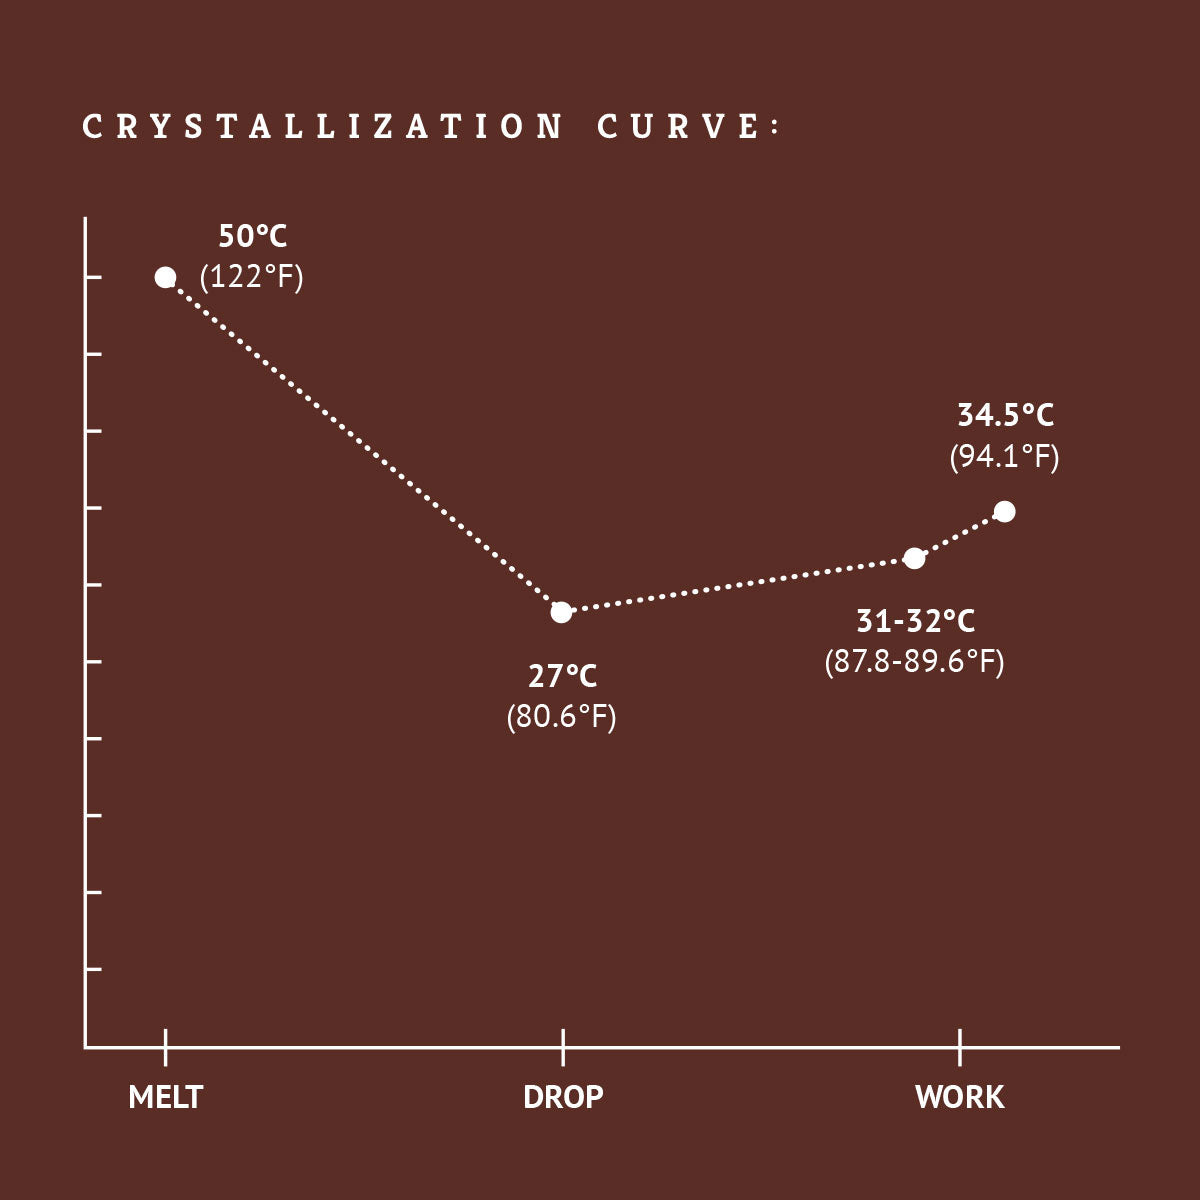 58% dark chocolate crystallization curve tempering